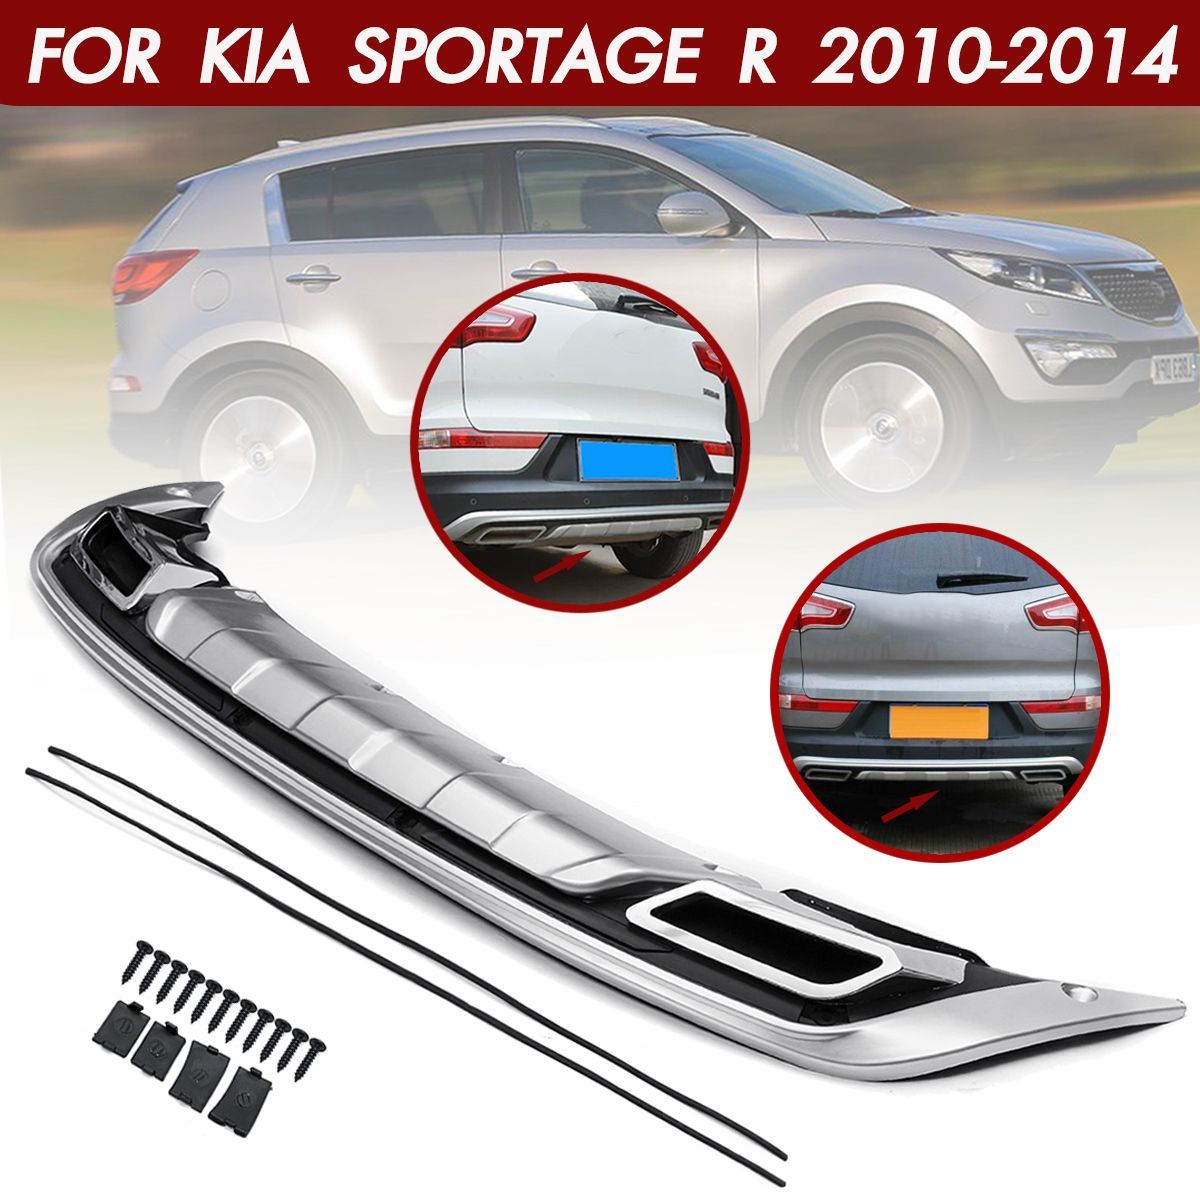 Car-ABS-Rear-Bumper-Guard-Board-Protector-Exterior-For-KIA-Sportage-R-2010-2014-1580559